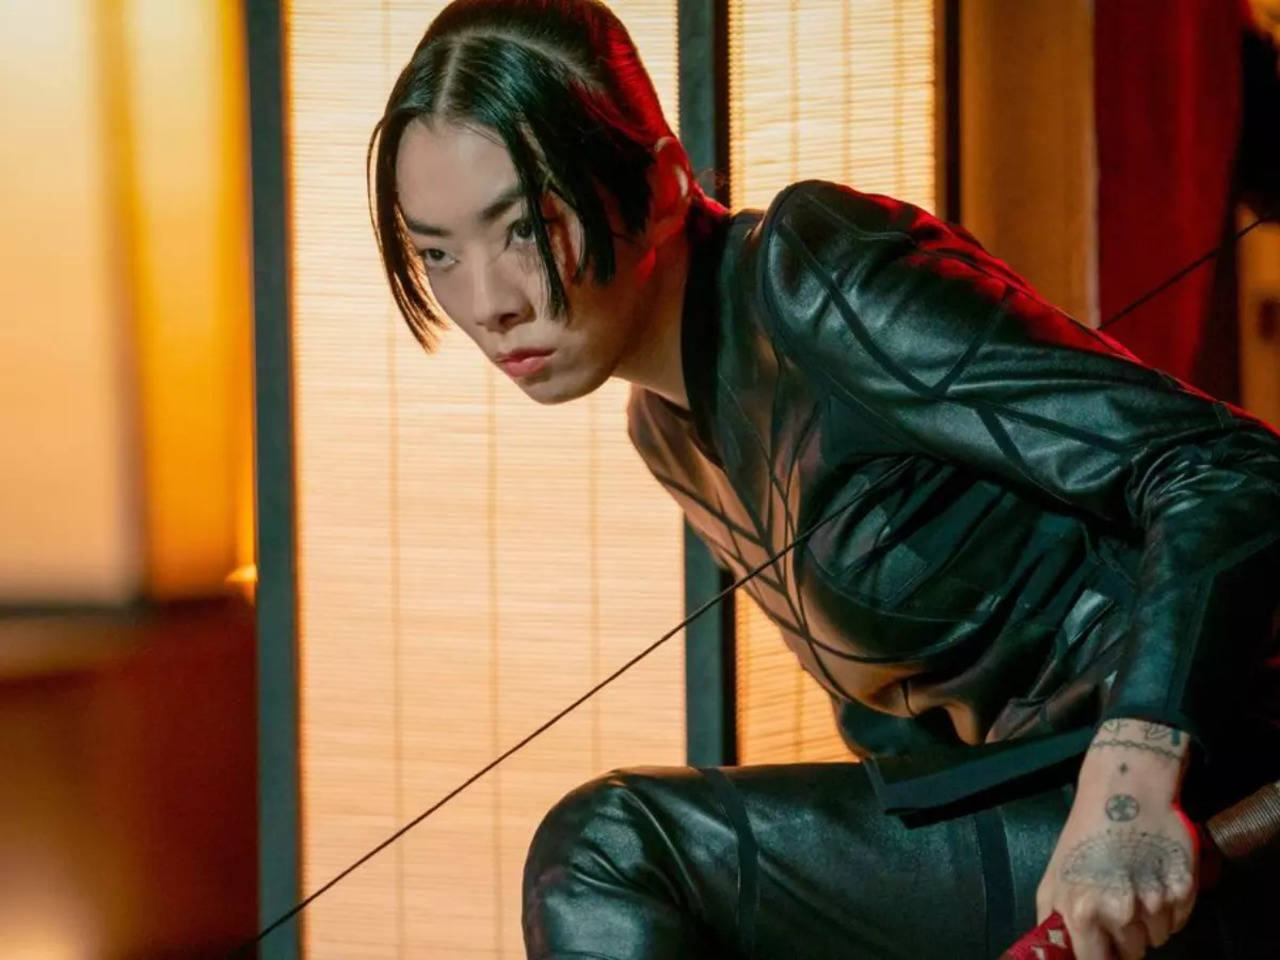 Rina Sawayama's role as assassin Akira in John Wick: Chapter 4 ...